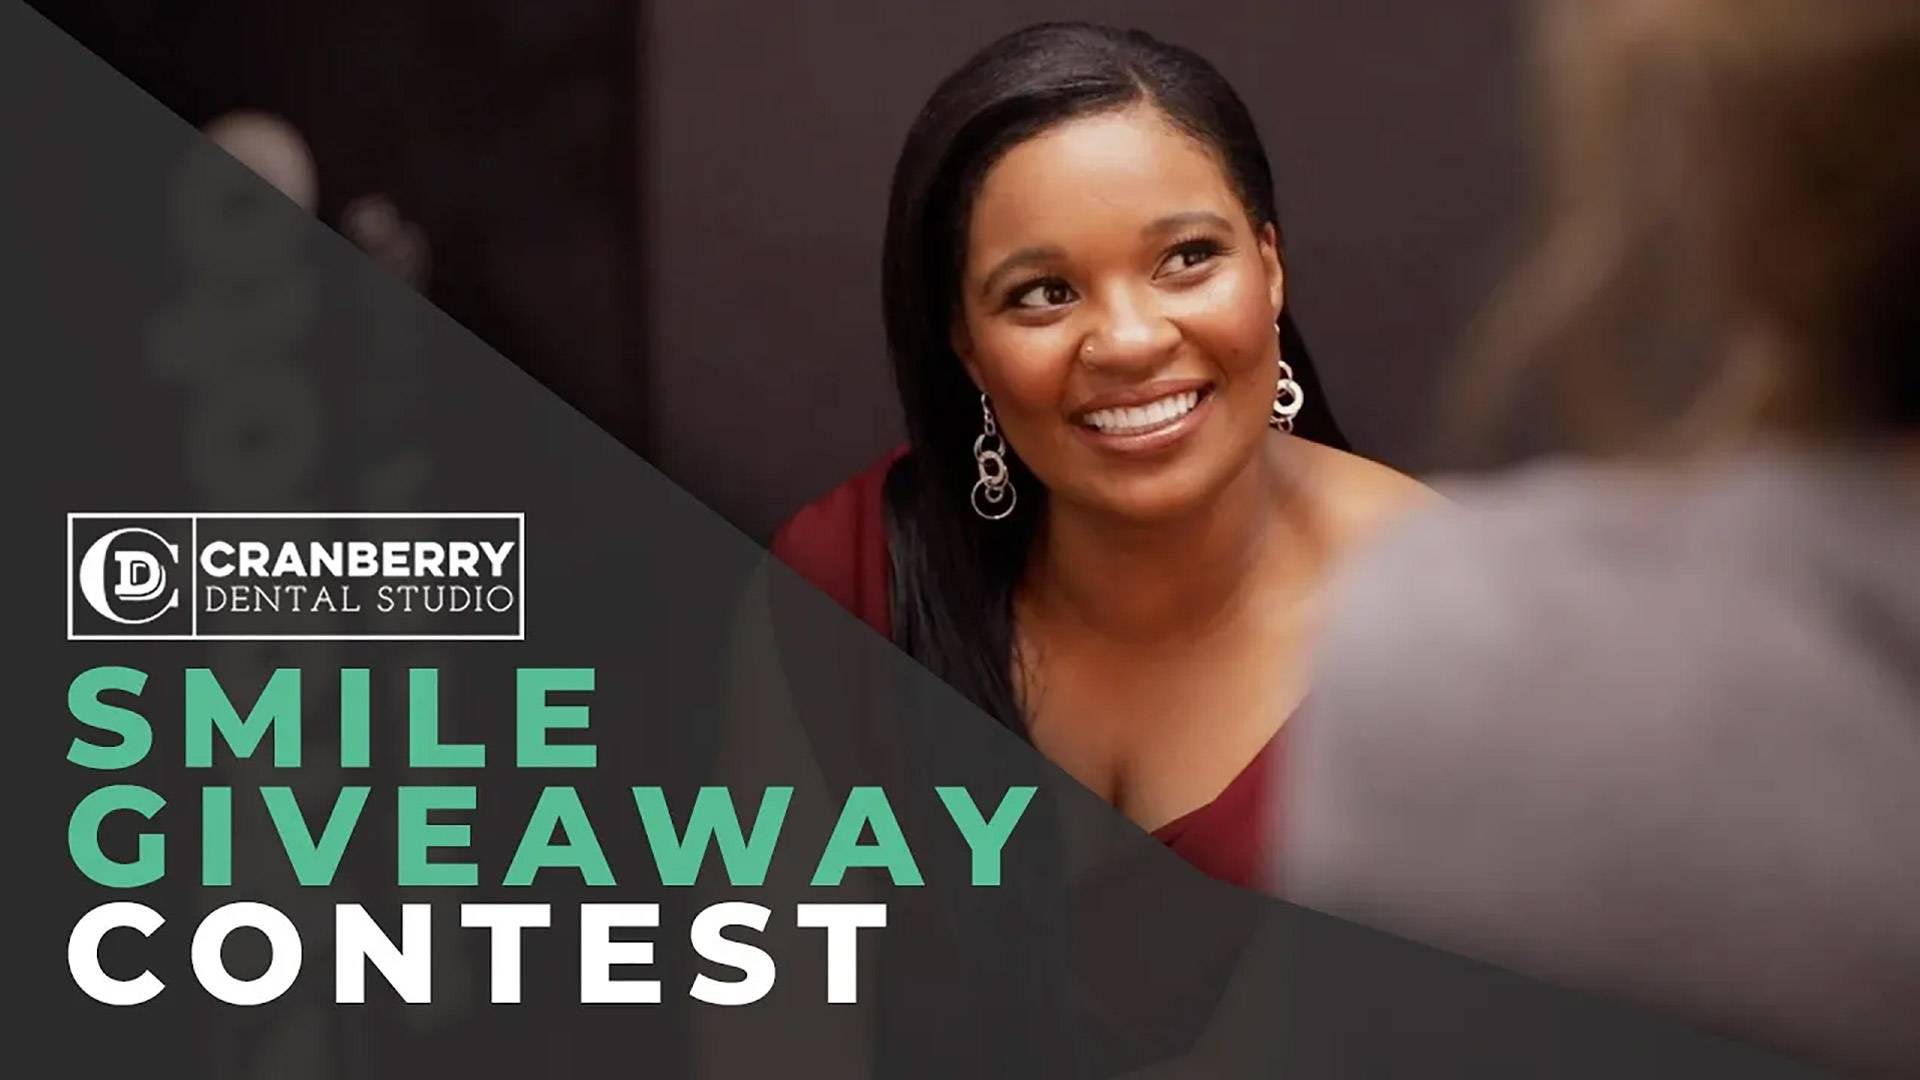 Cranberry Dental Studio Smile Giveaway Contest Image